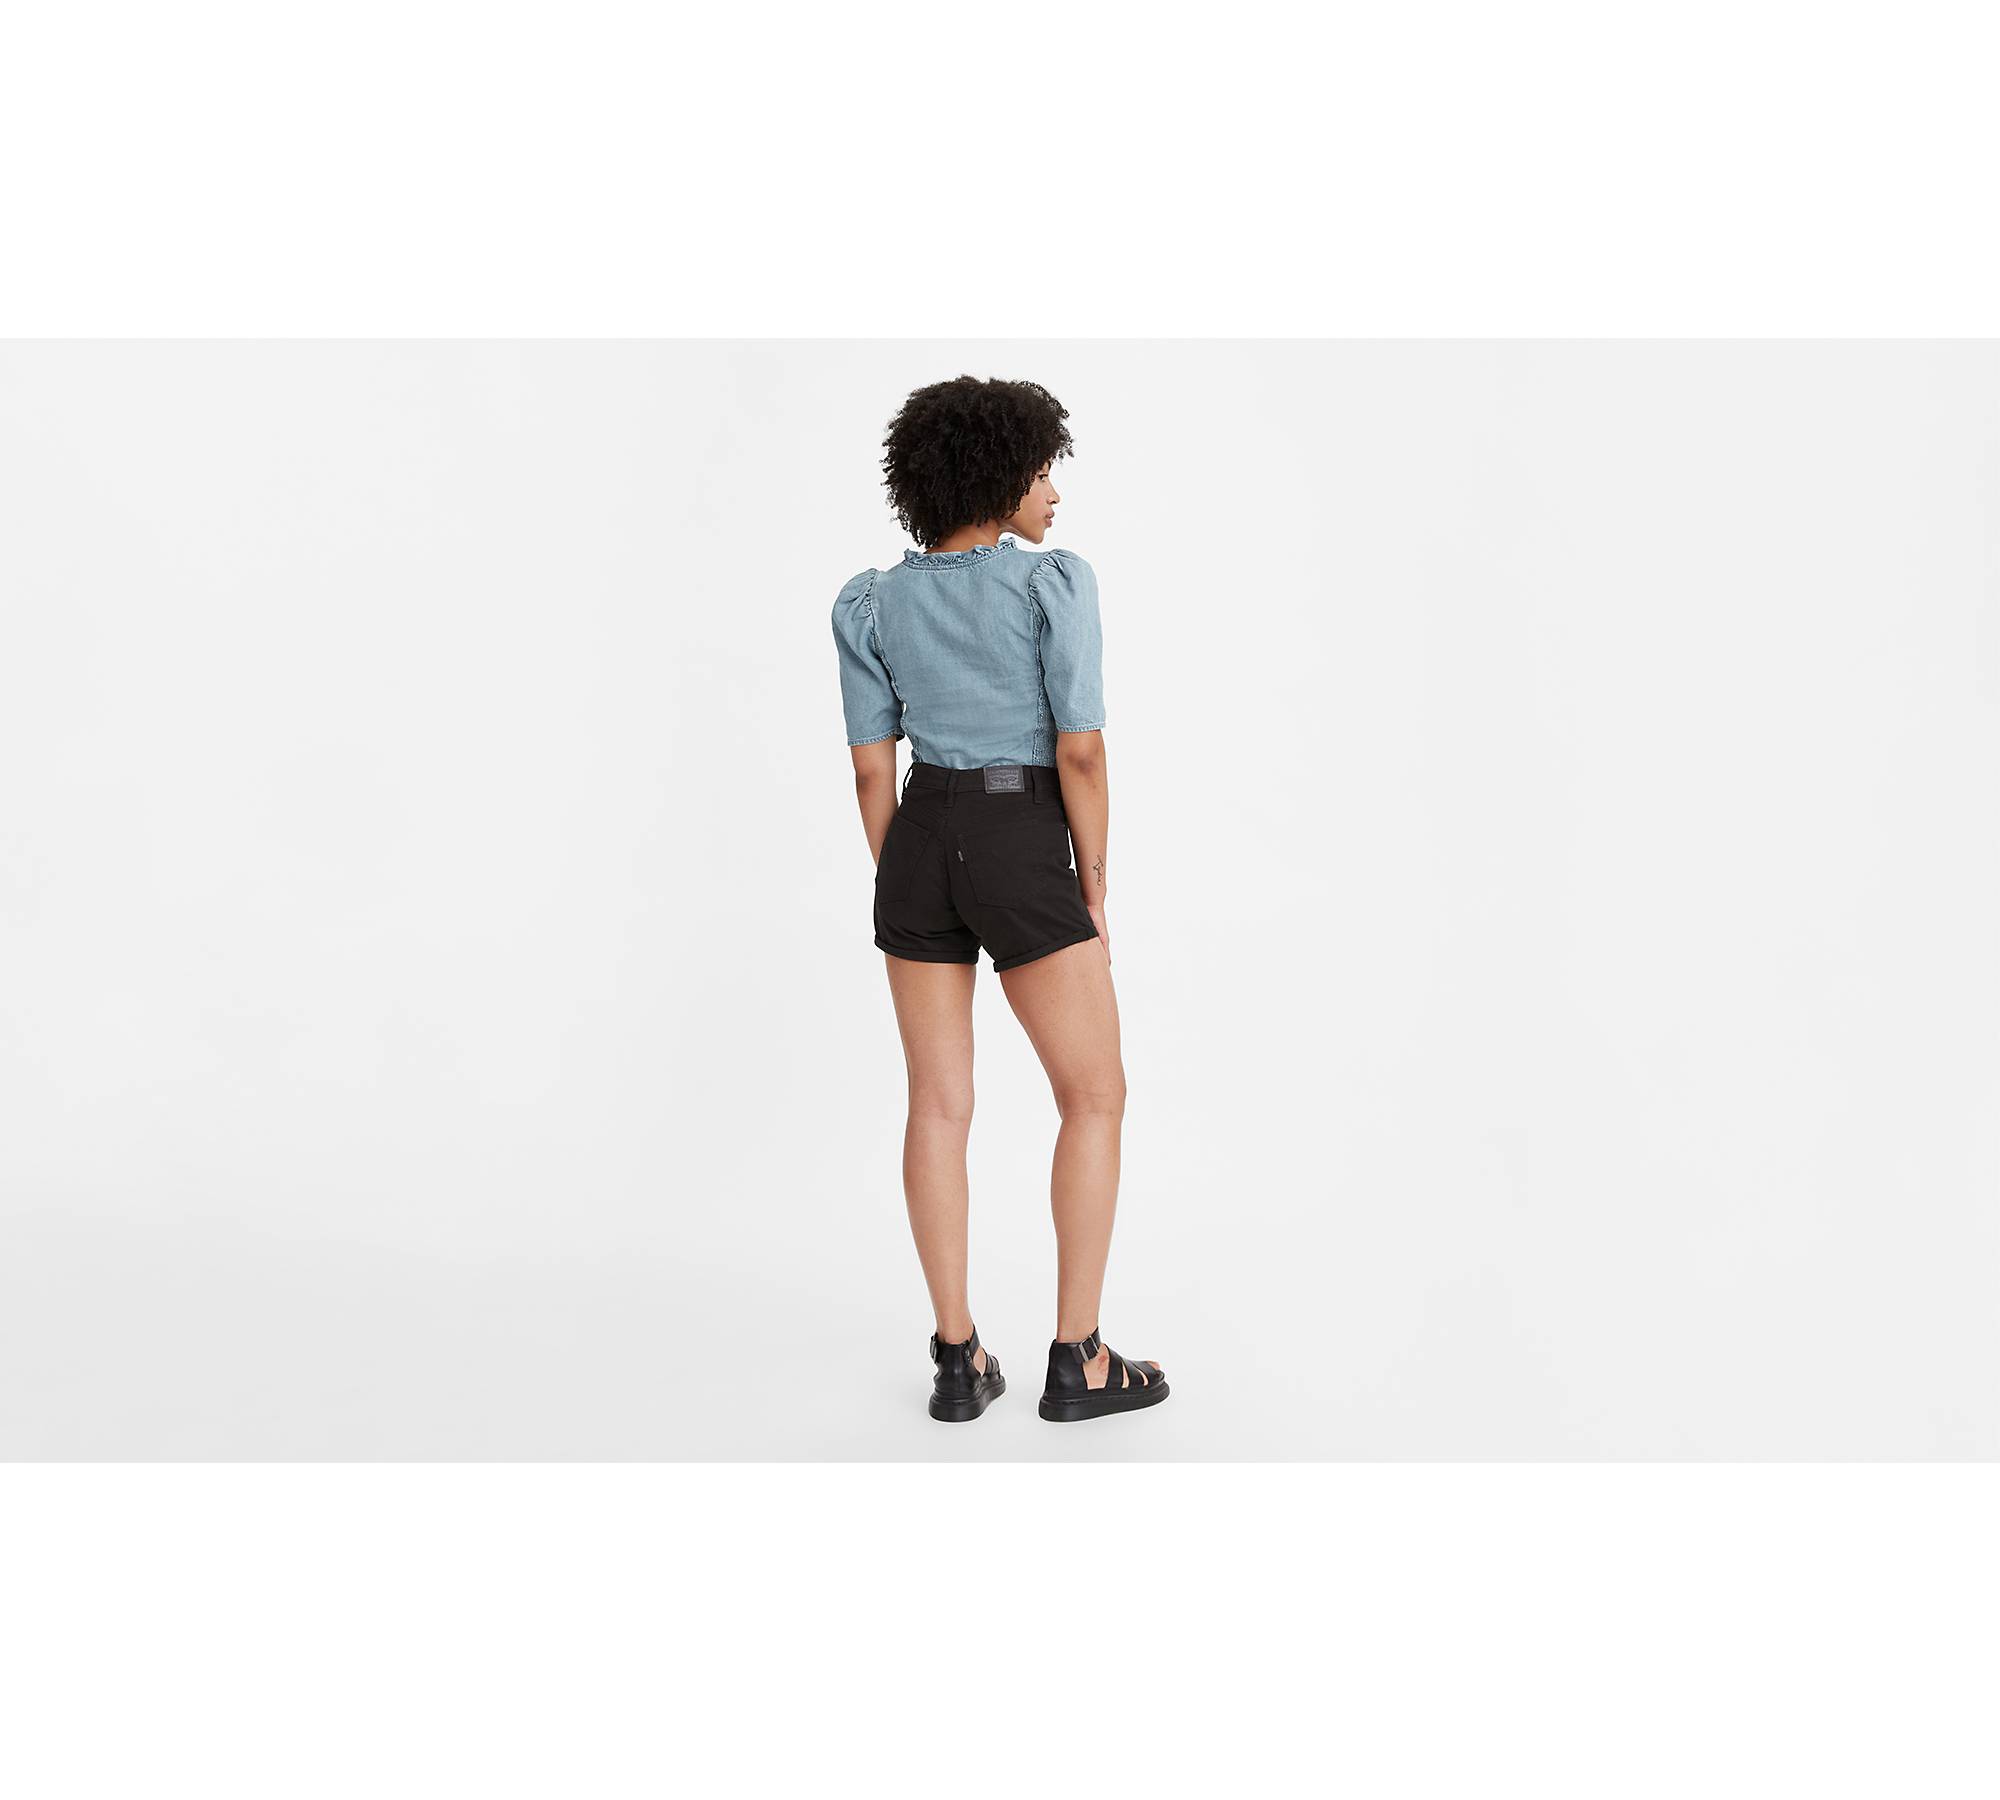 Women's Mid-Length Shorts